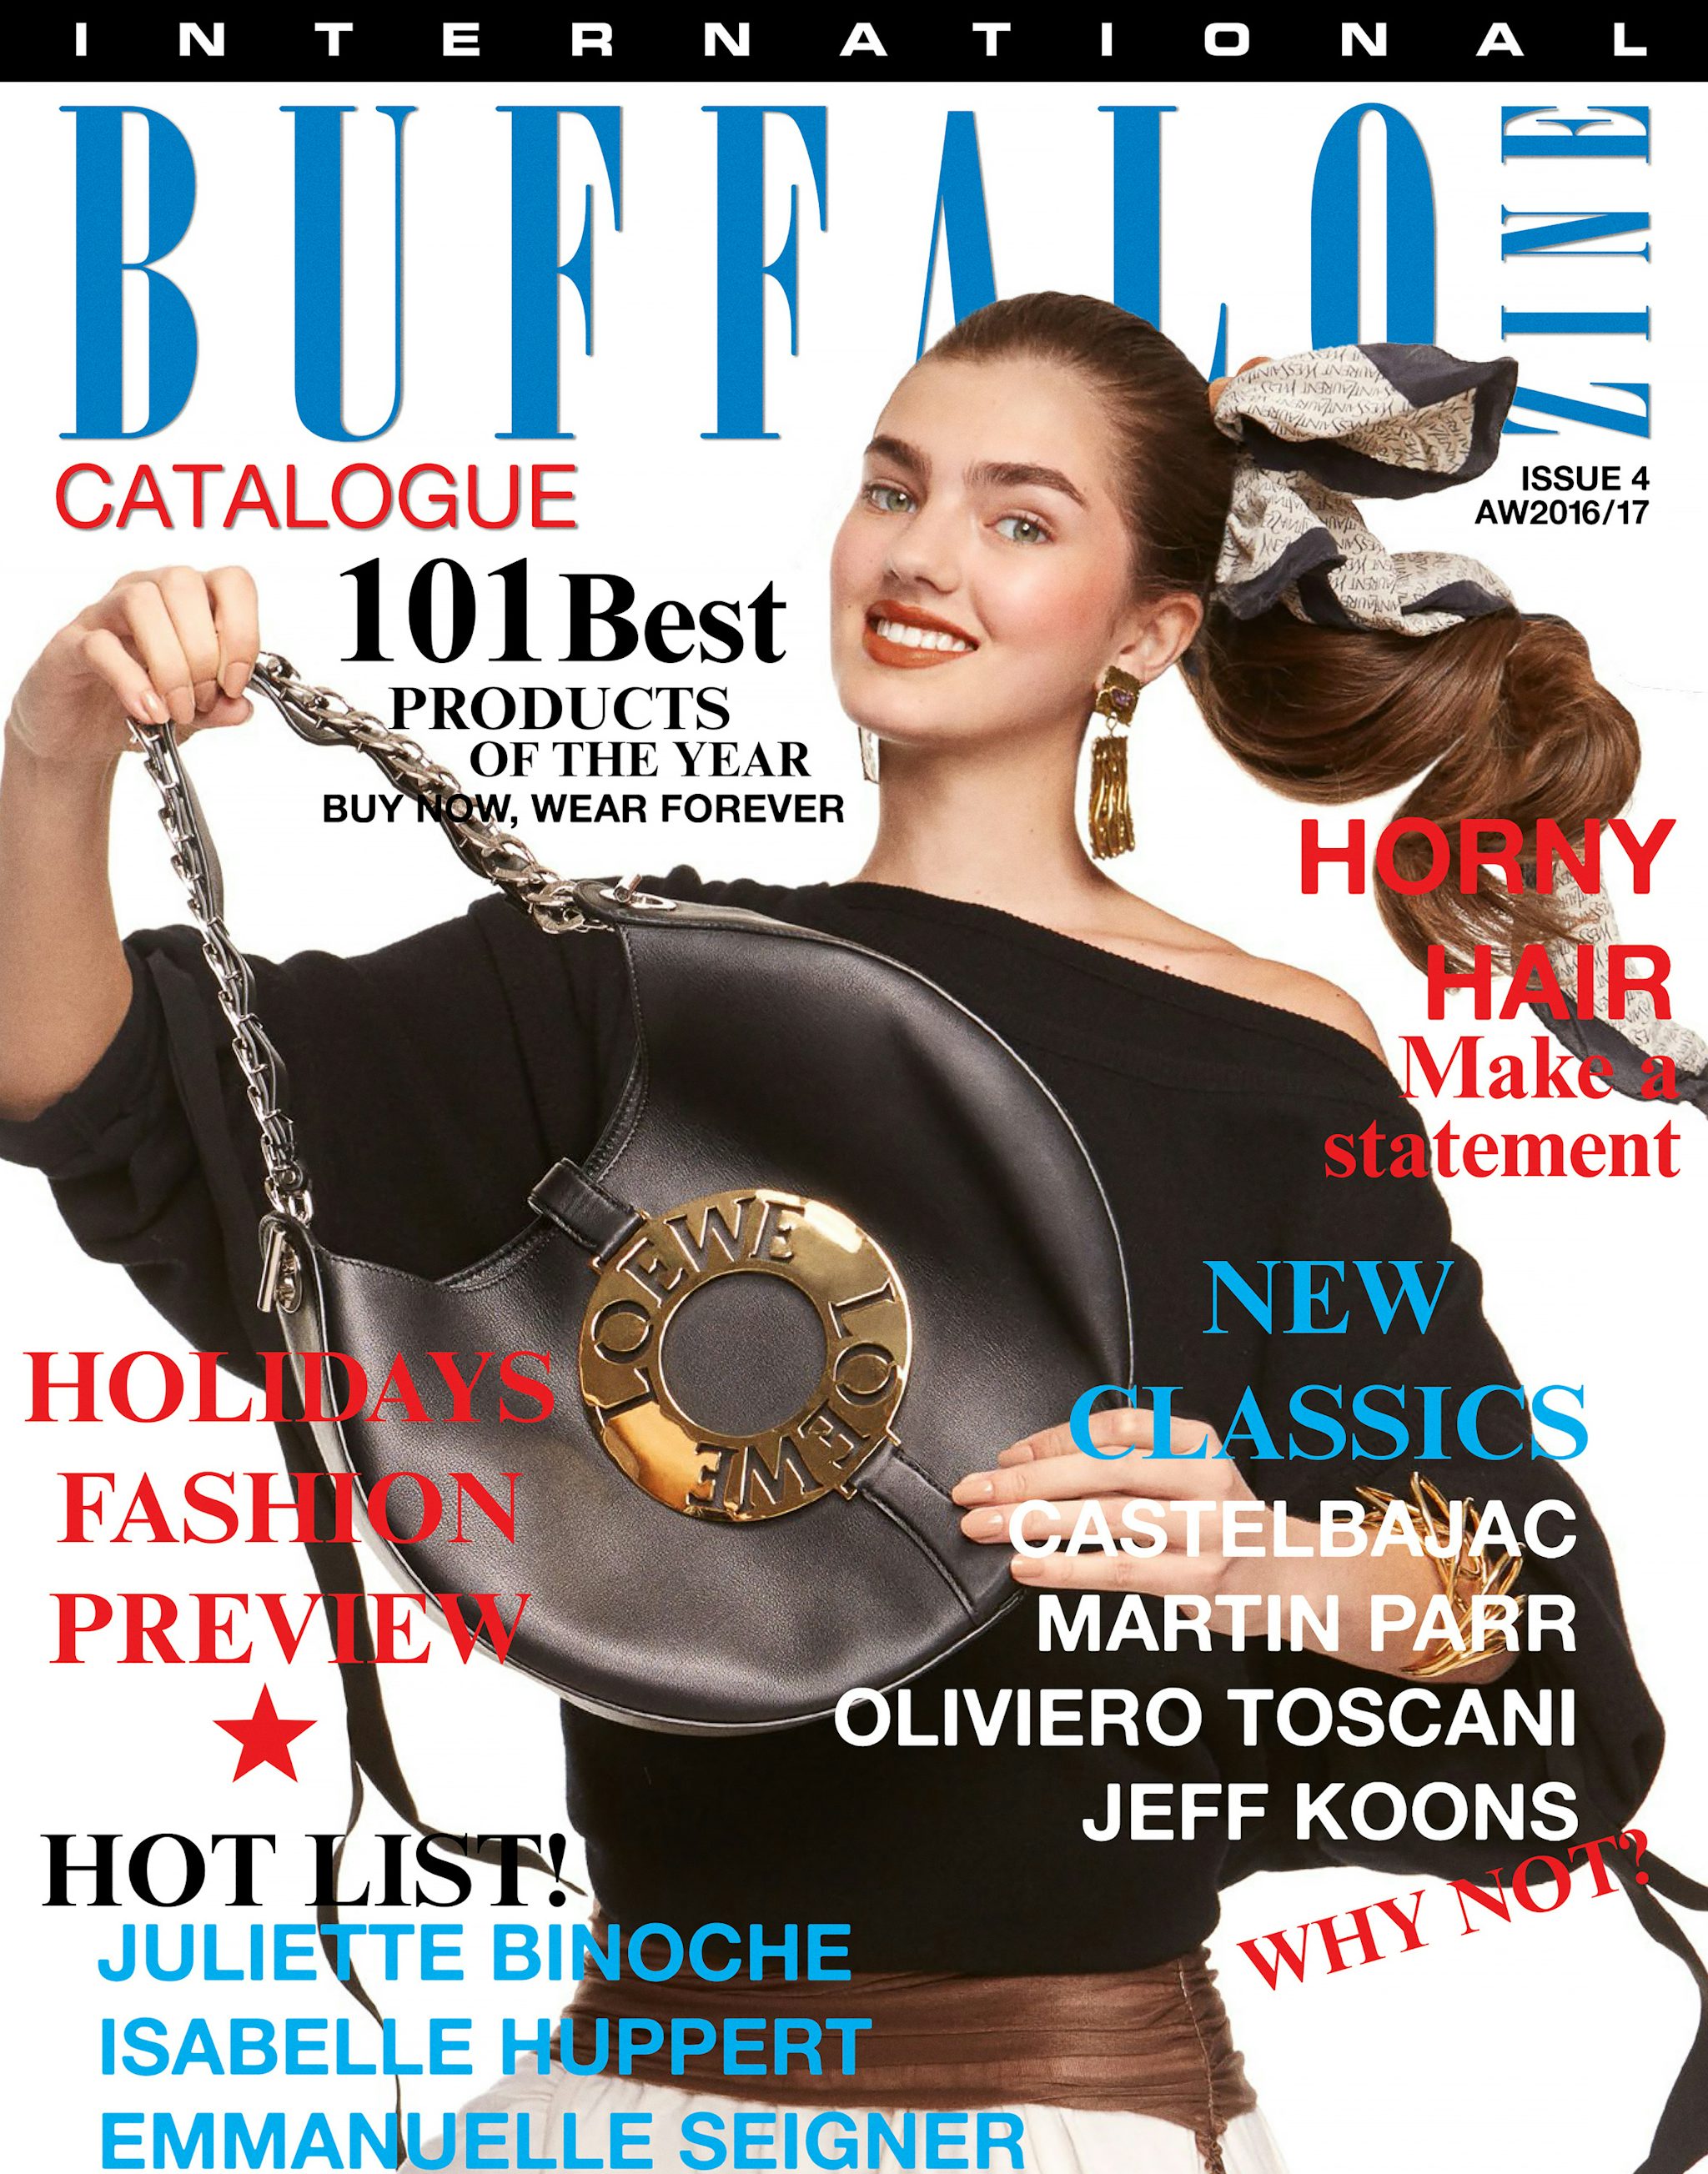 'La fragrance qui t'habille', Issue 4 Buffalo Zine Charlotte Wales 2023